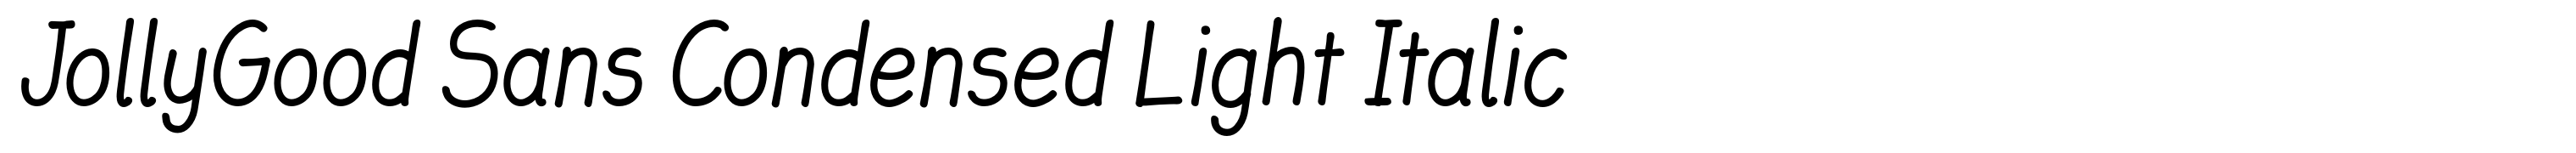 JollyGood Sans Condensed Light Italic